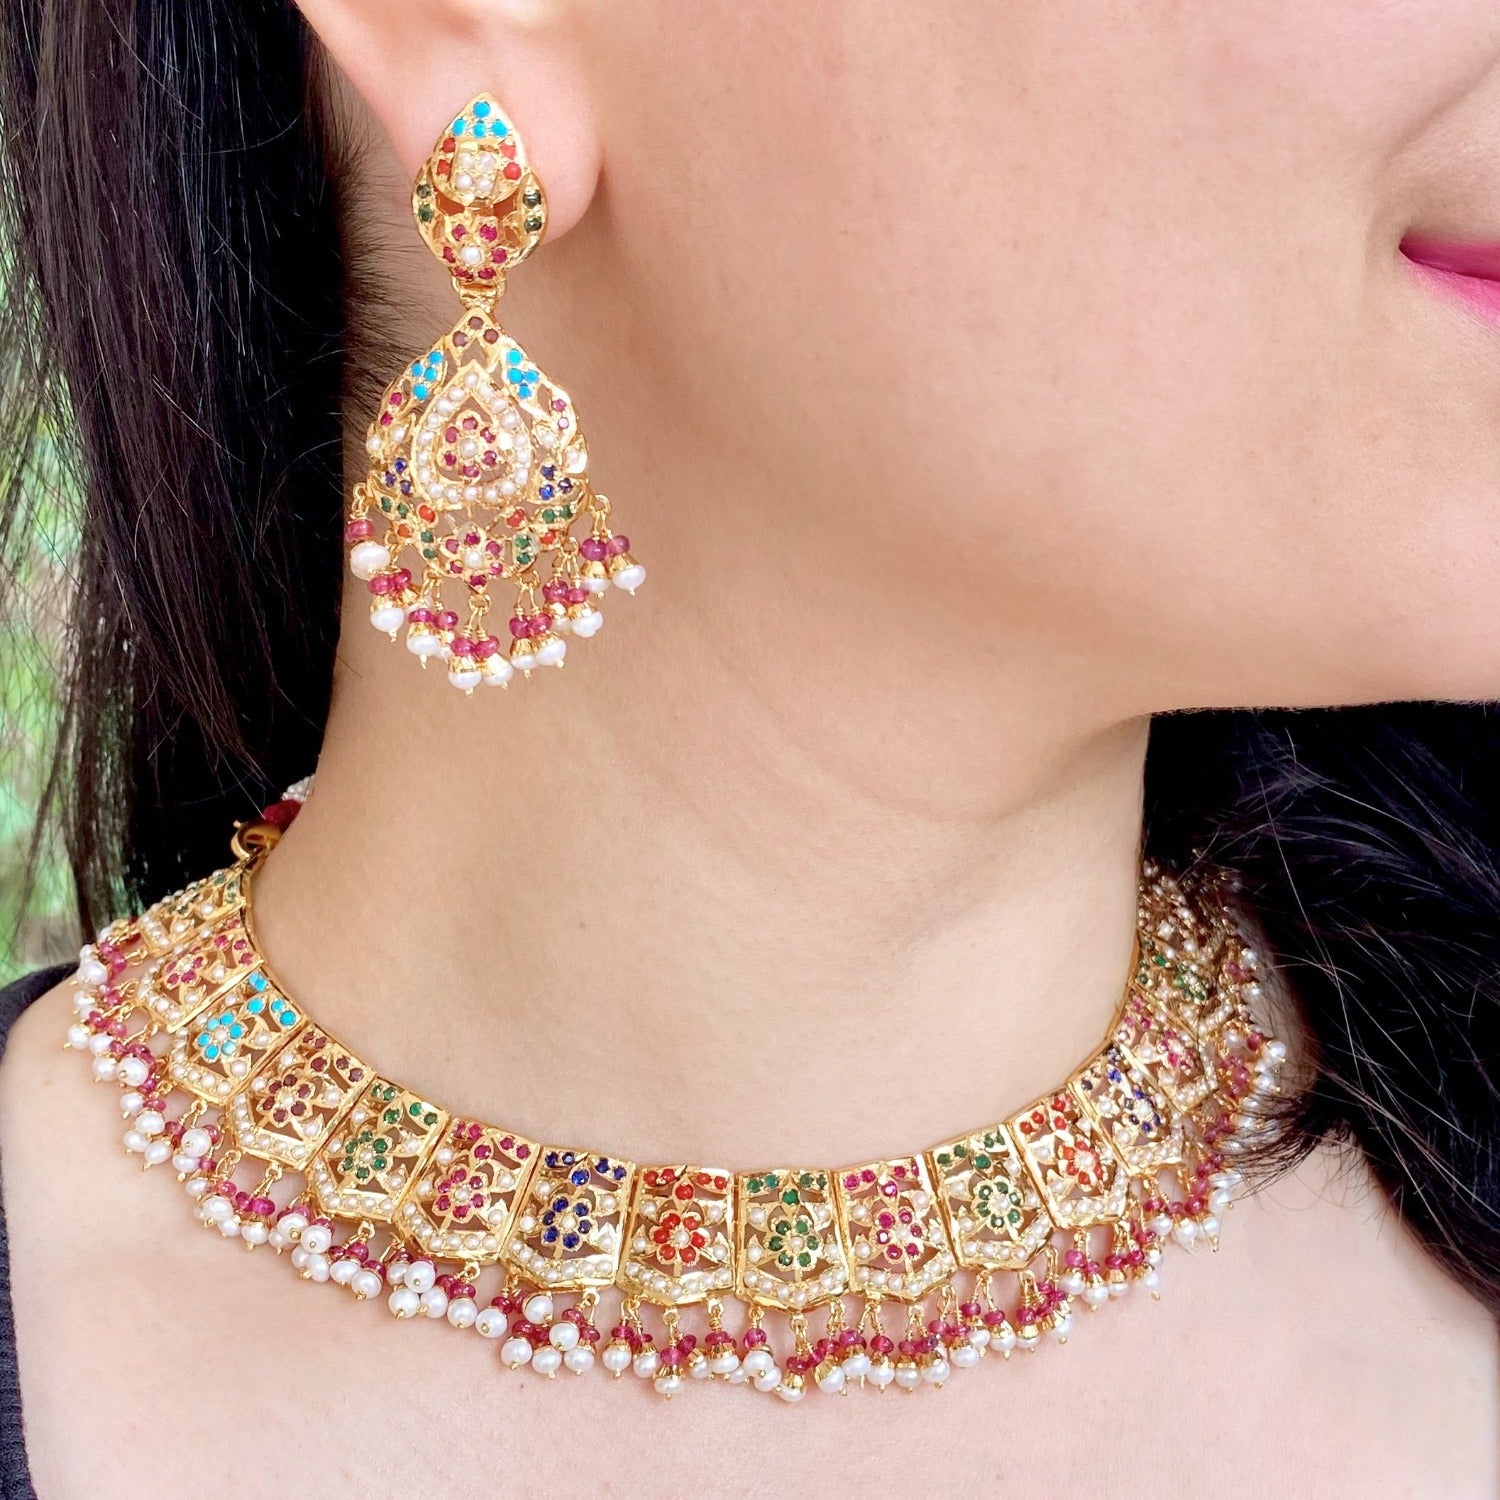 hyderabadi navratna necklace with real pearls